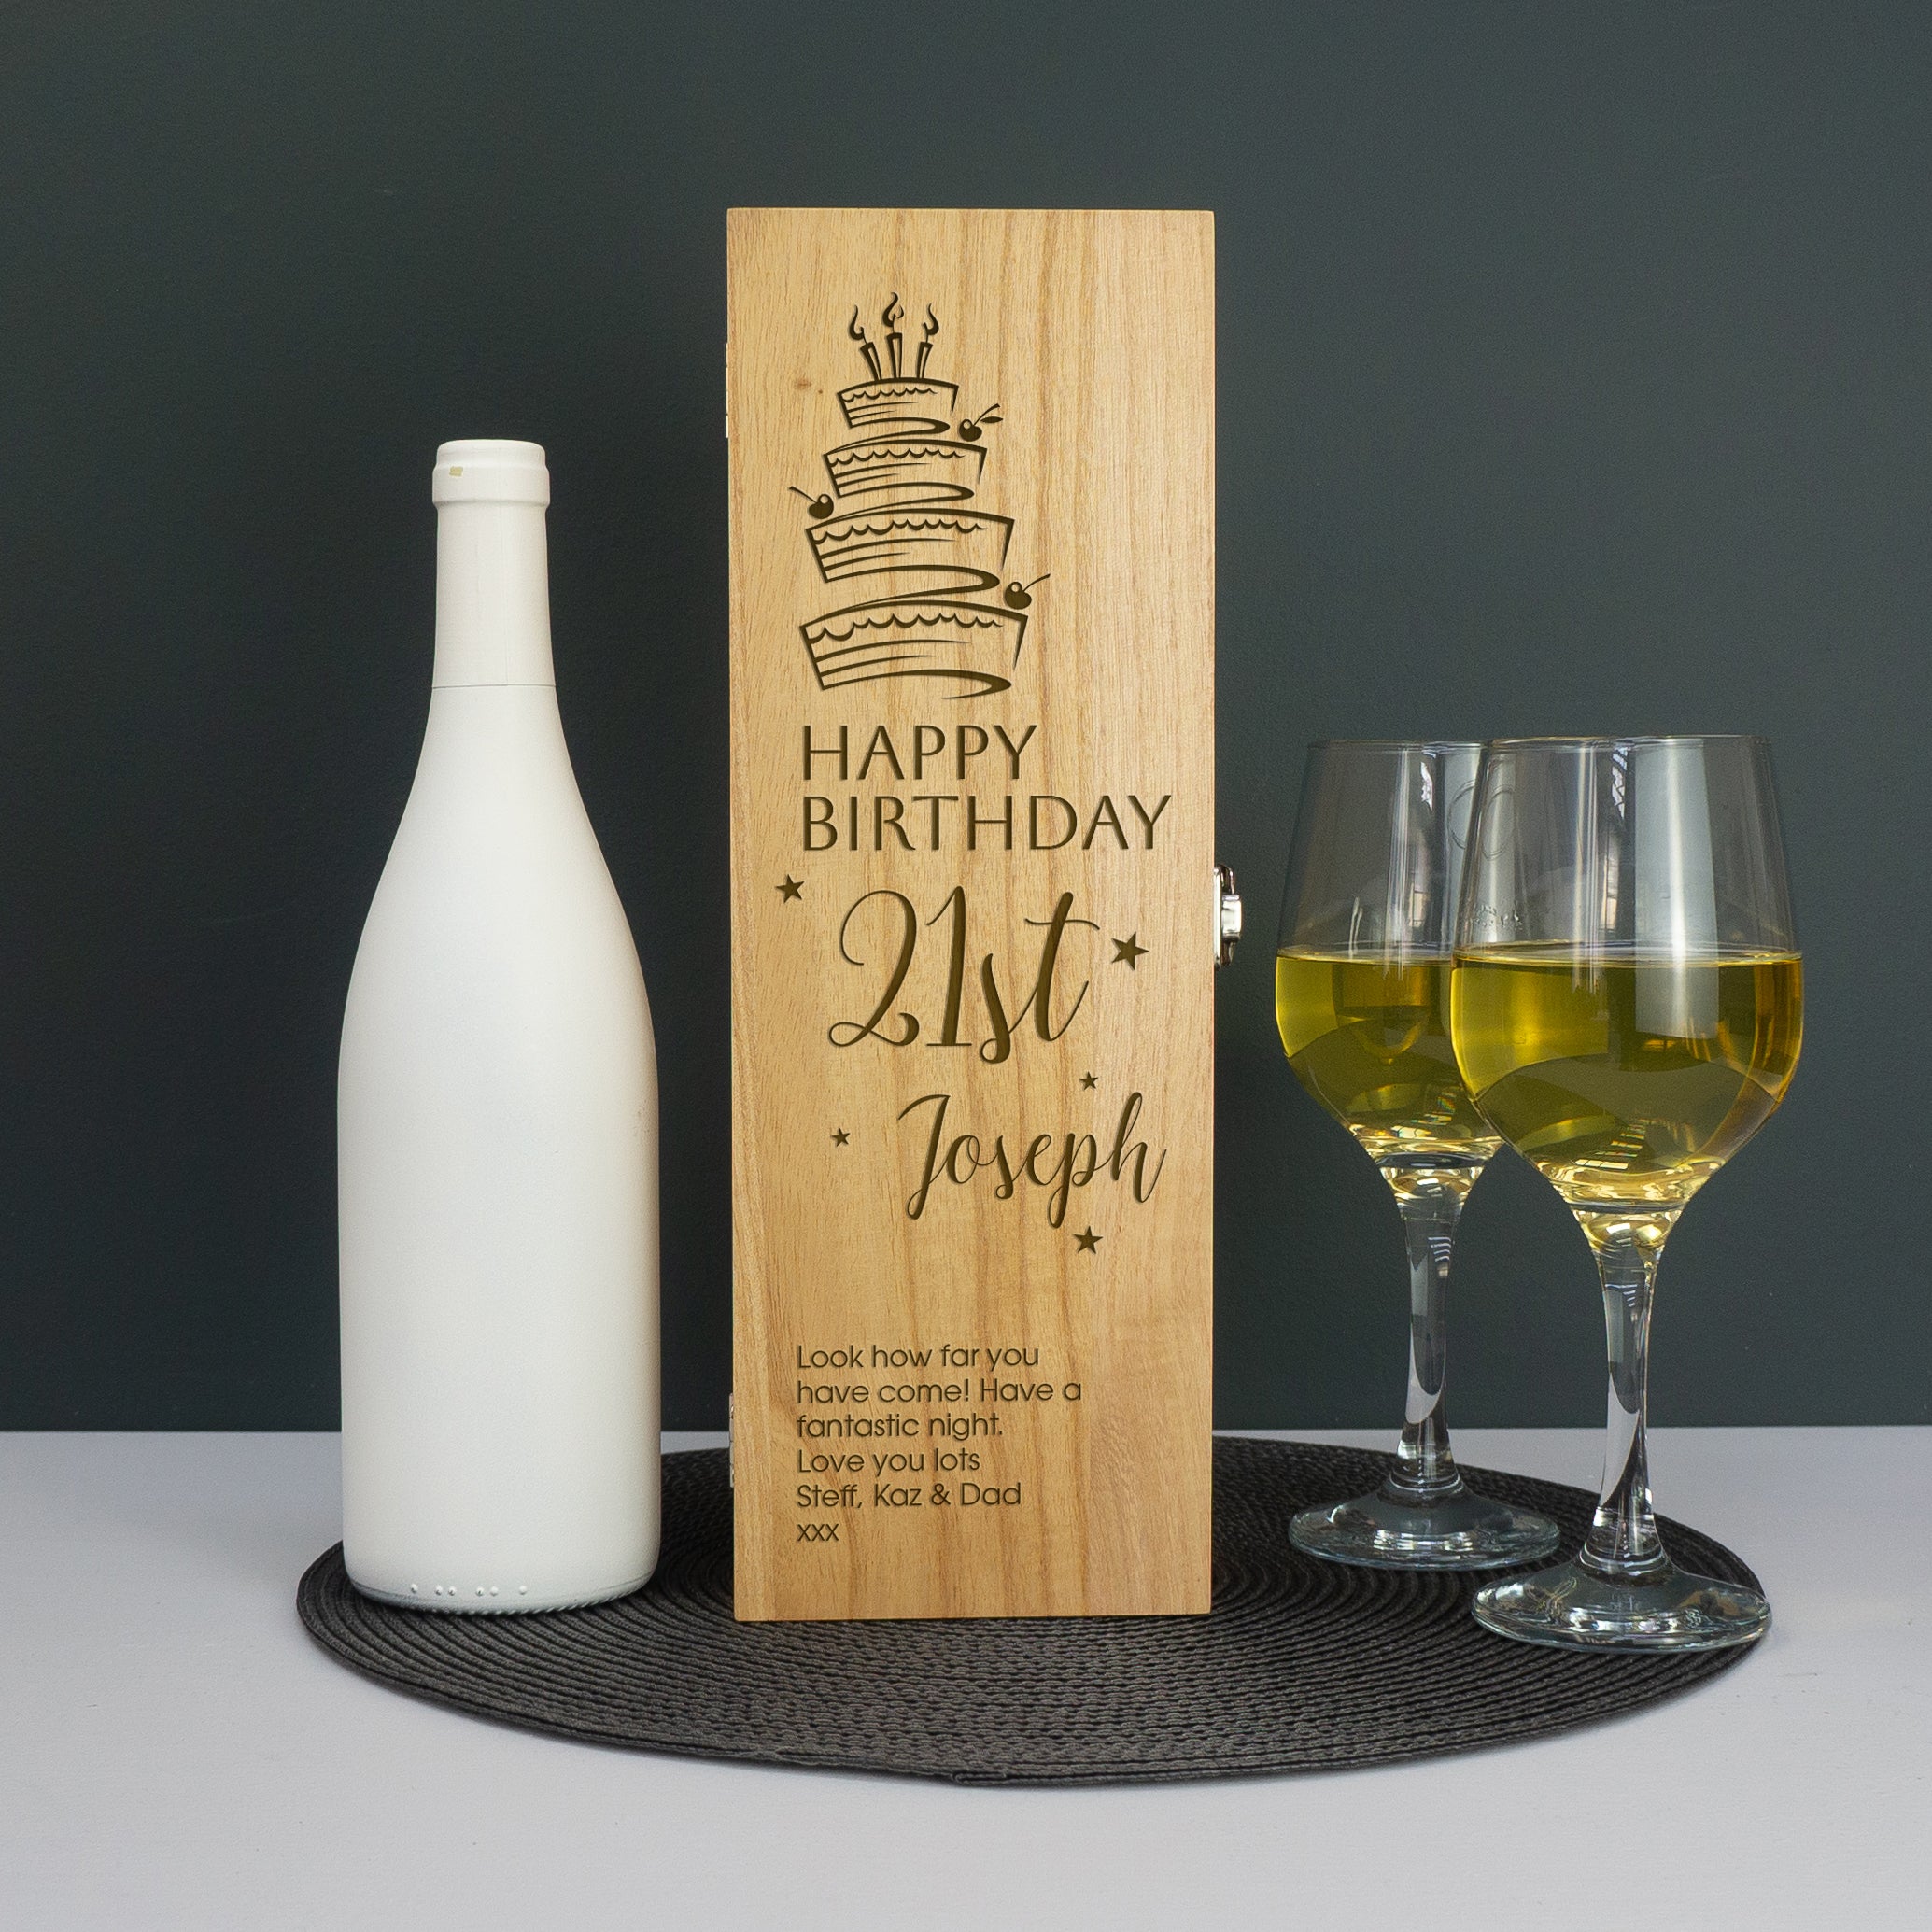 21st birthday wine champagne bottle gifting box